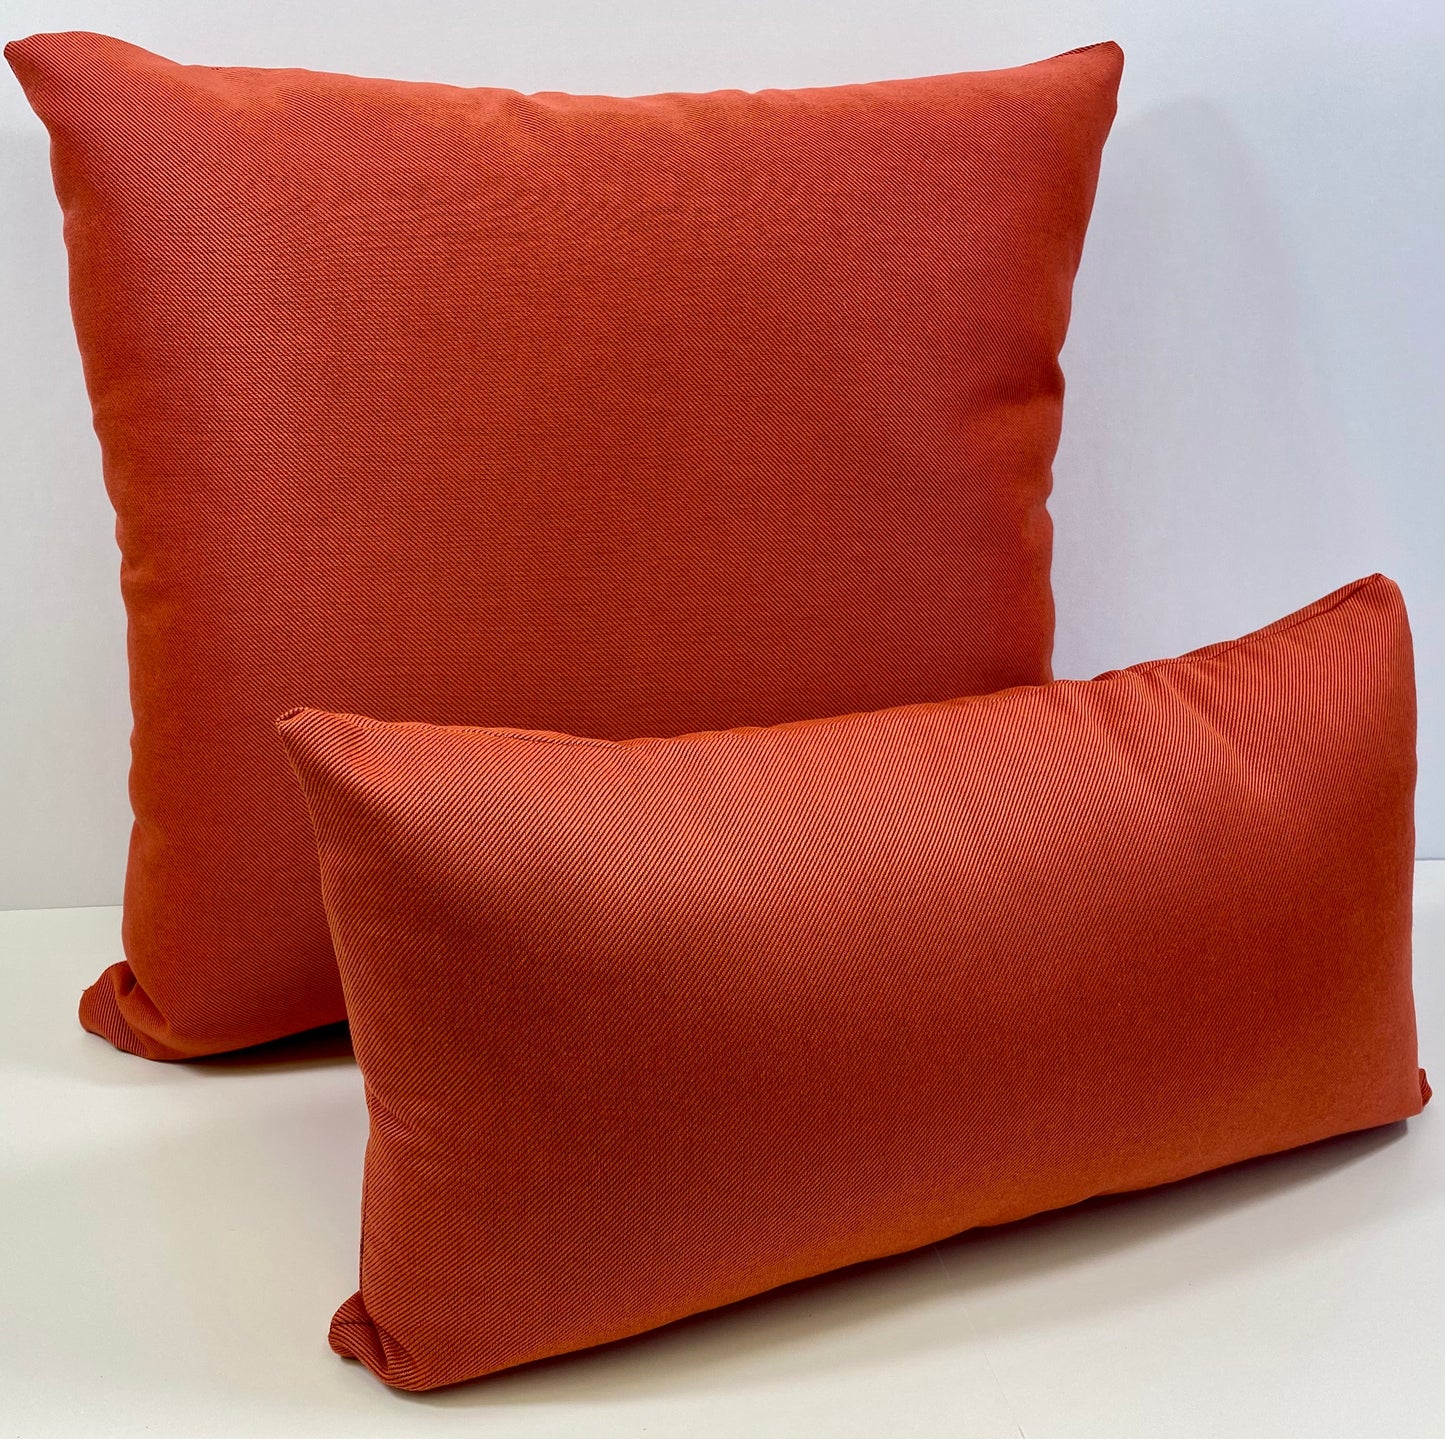 Luxury Outdoor Lumbar Pillow - 12" x 22" - Madras - Sangria; Sunbrella, or equivalent, fabric with fiber fill